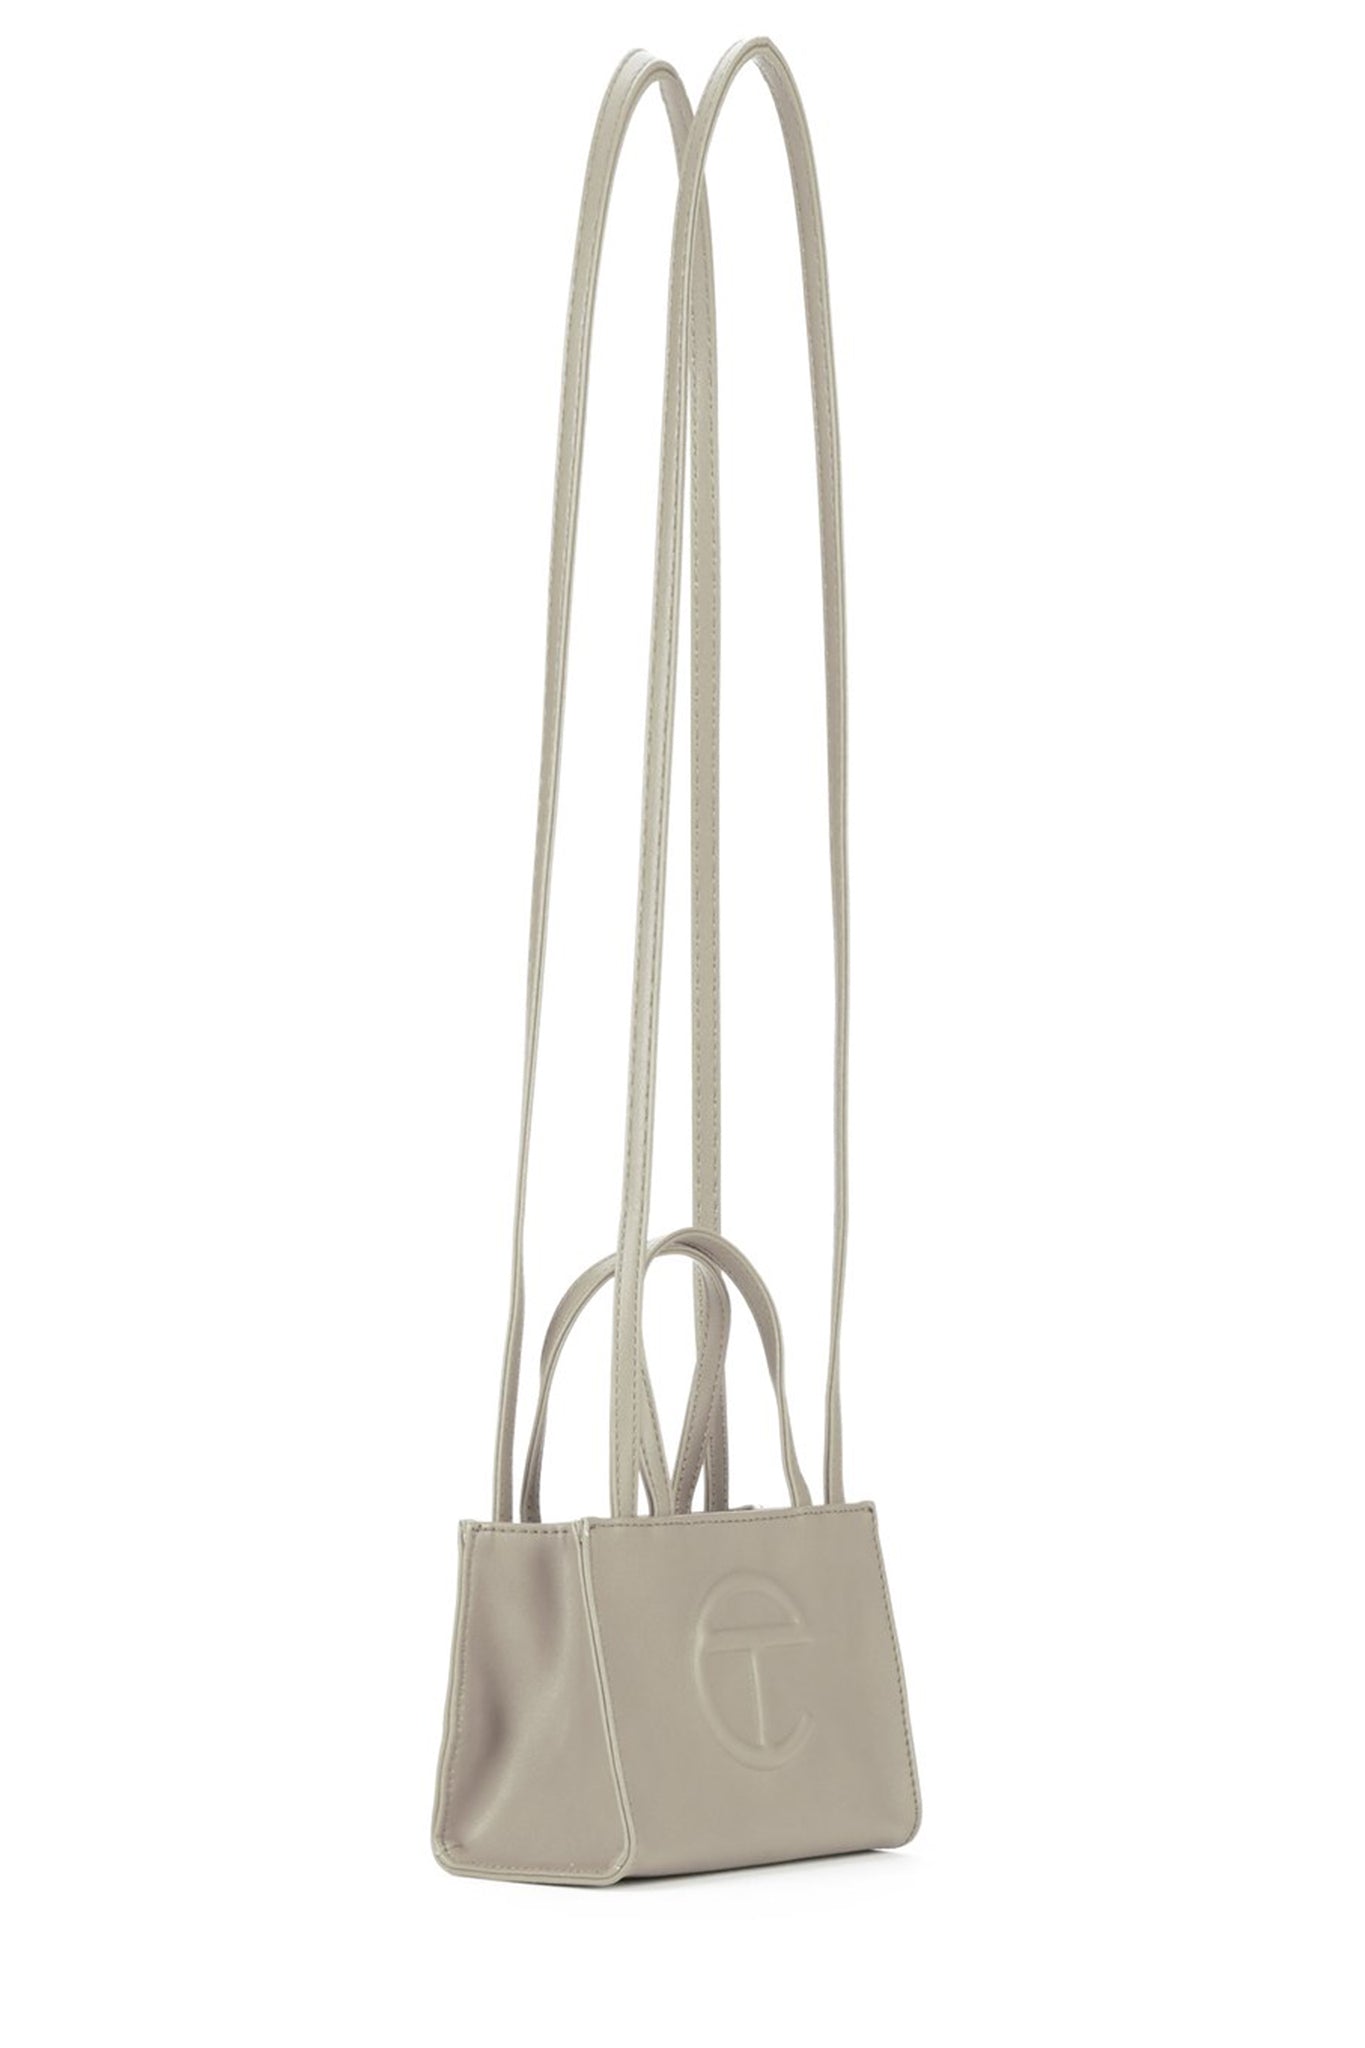 Telfar Small Shopping Bag, Grey